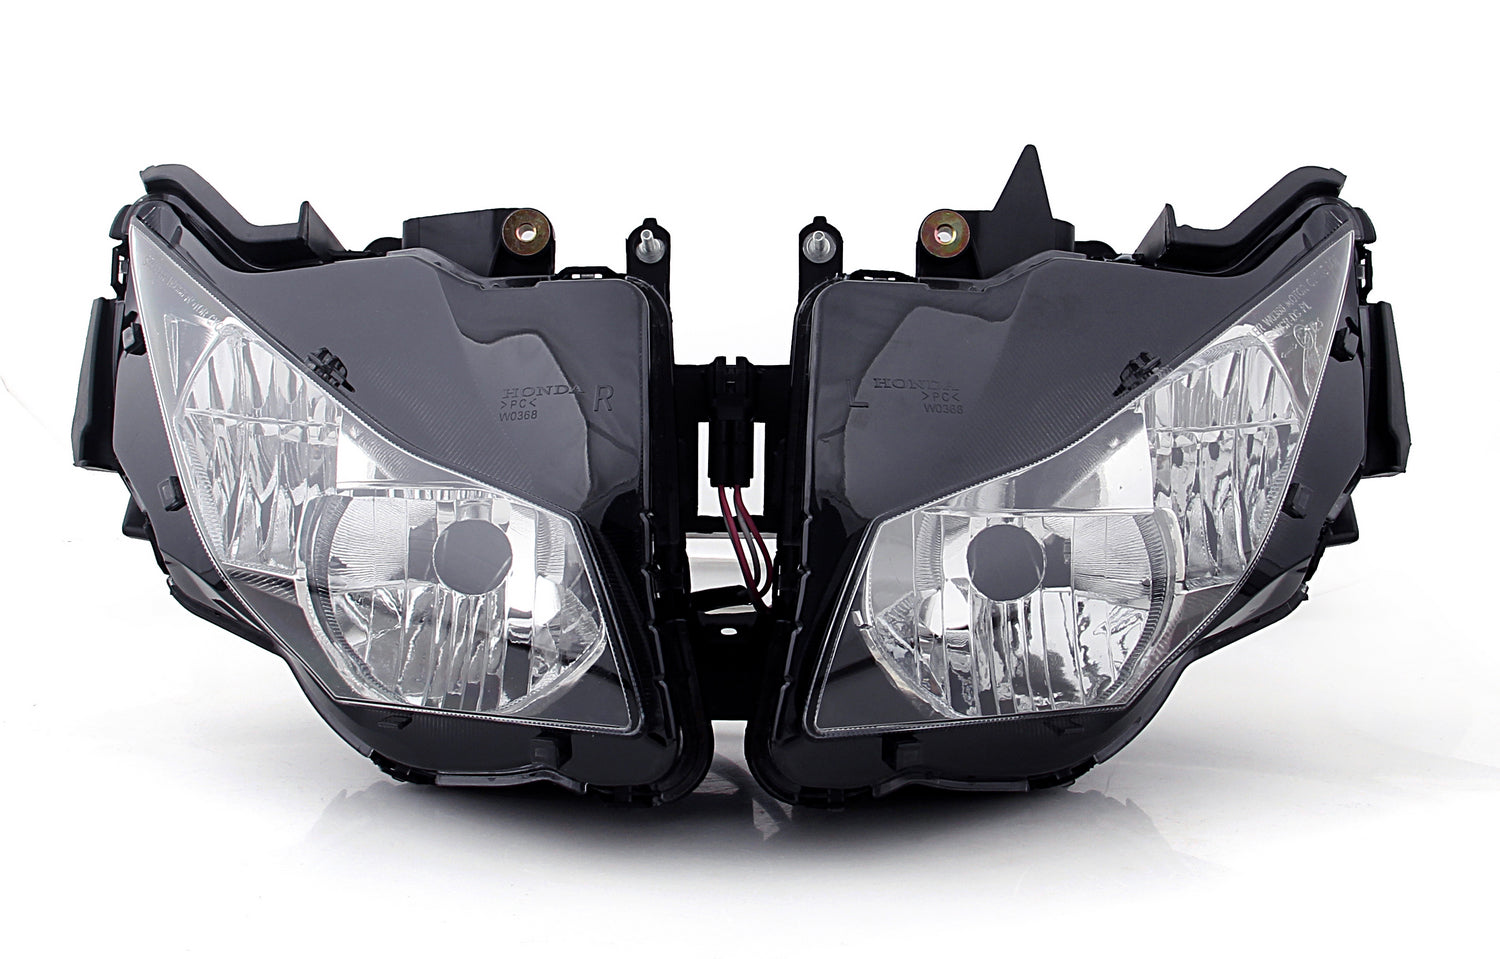 Ensamblaje de faros, luz de motocicleta, apto para Honda CBR1000RR 2012-2016 genérico